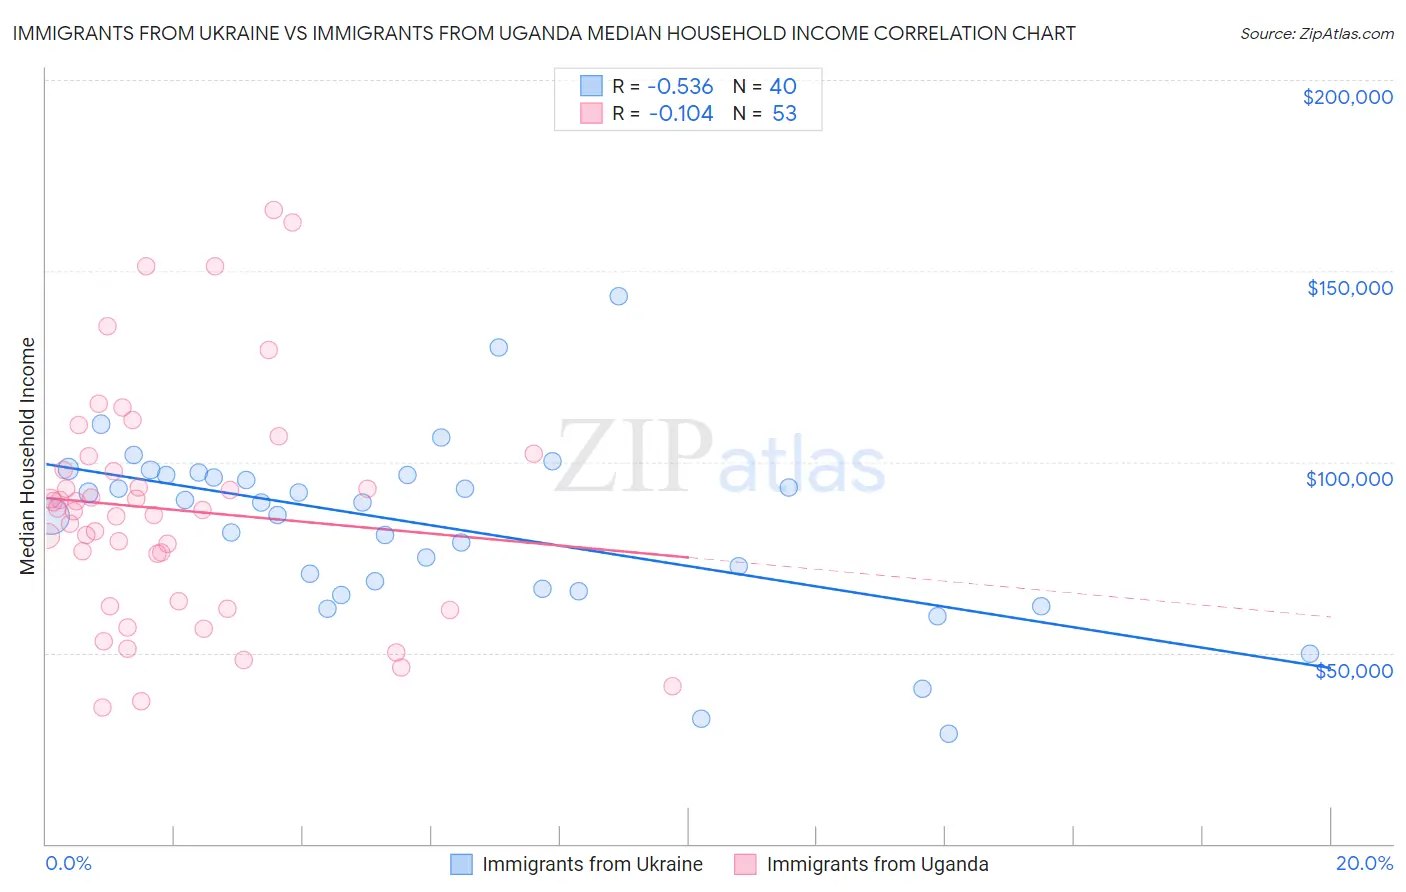 Immigrants from Ukraine vs Immigrants from Uganda Median Household Income